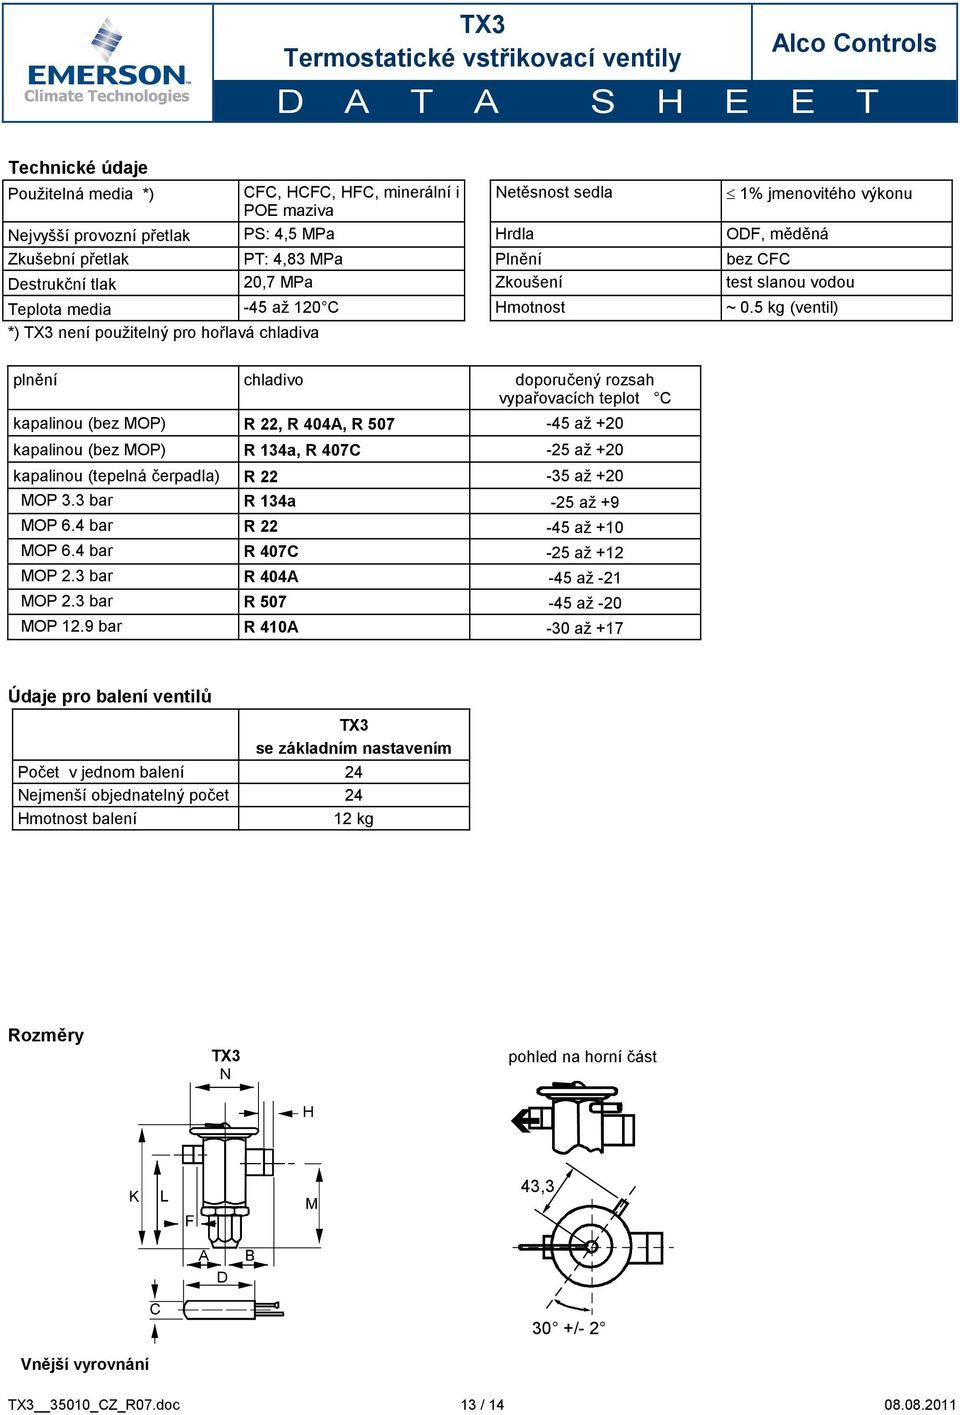 TX3 Termostatické vstřikovací ventily - PDF Free Download